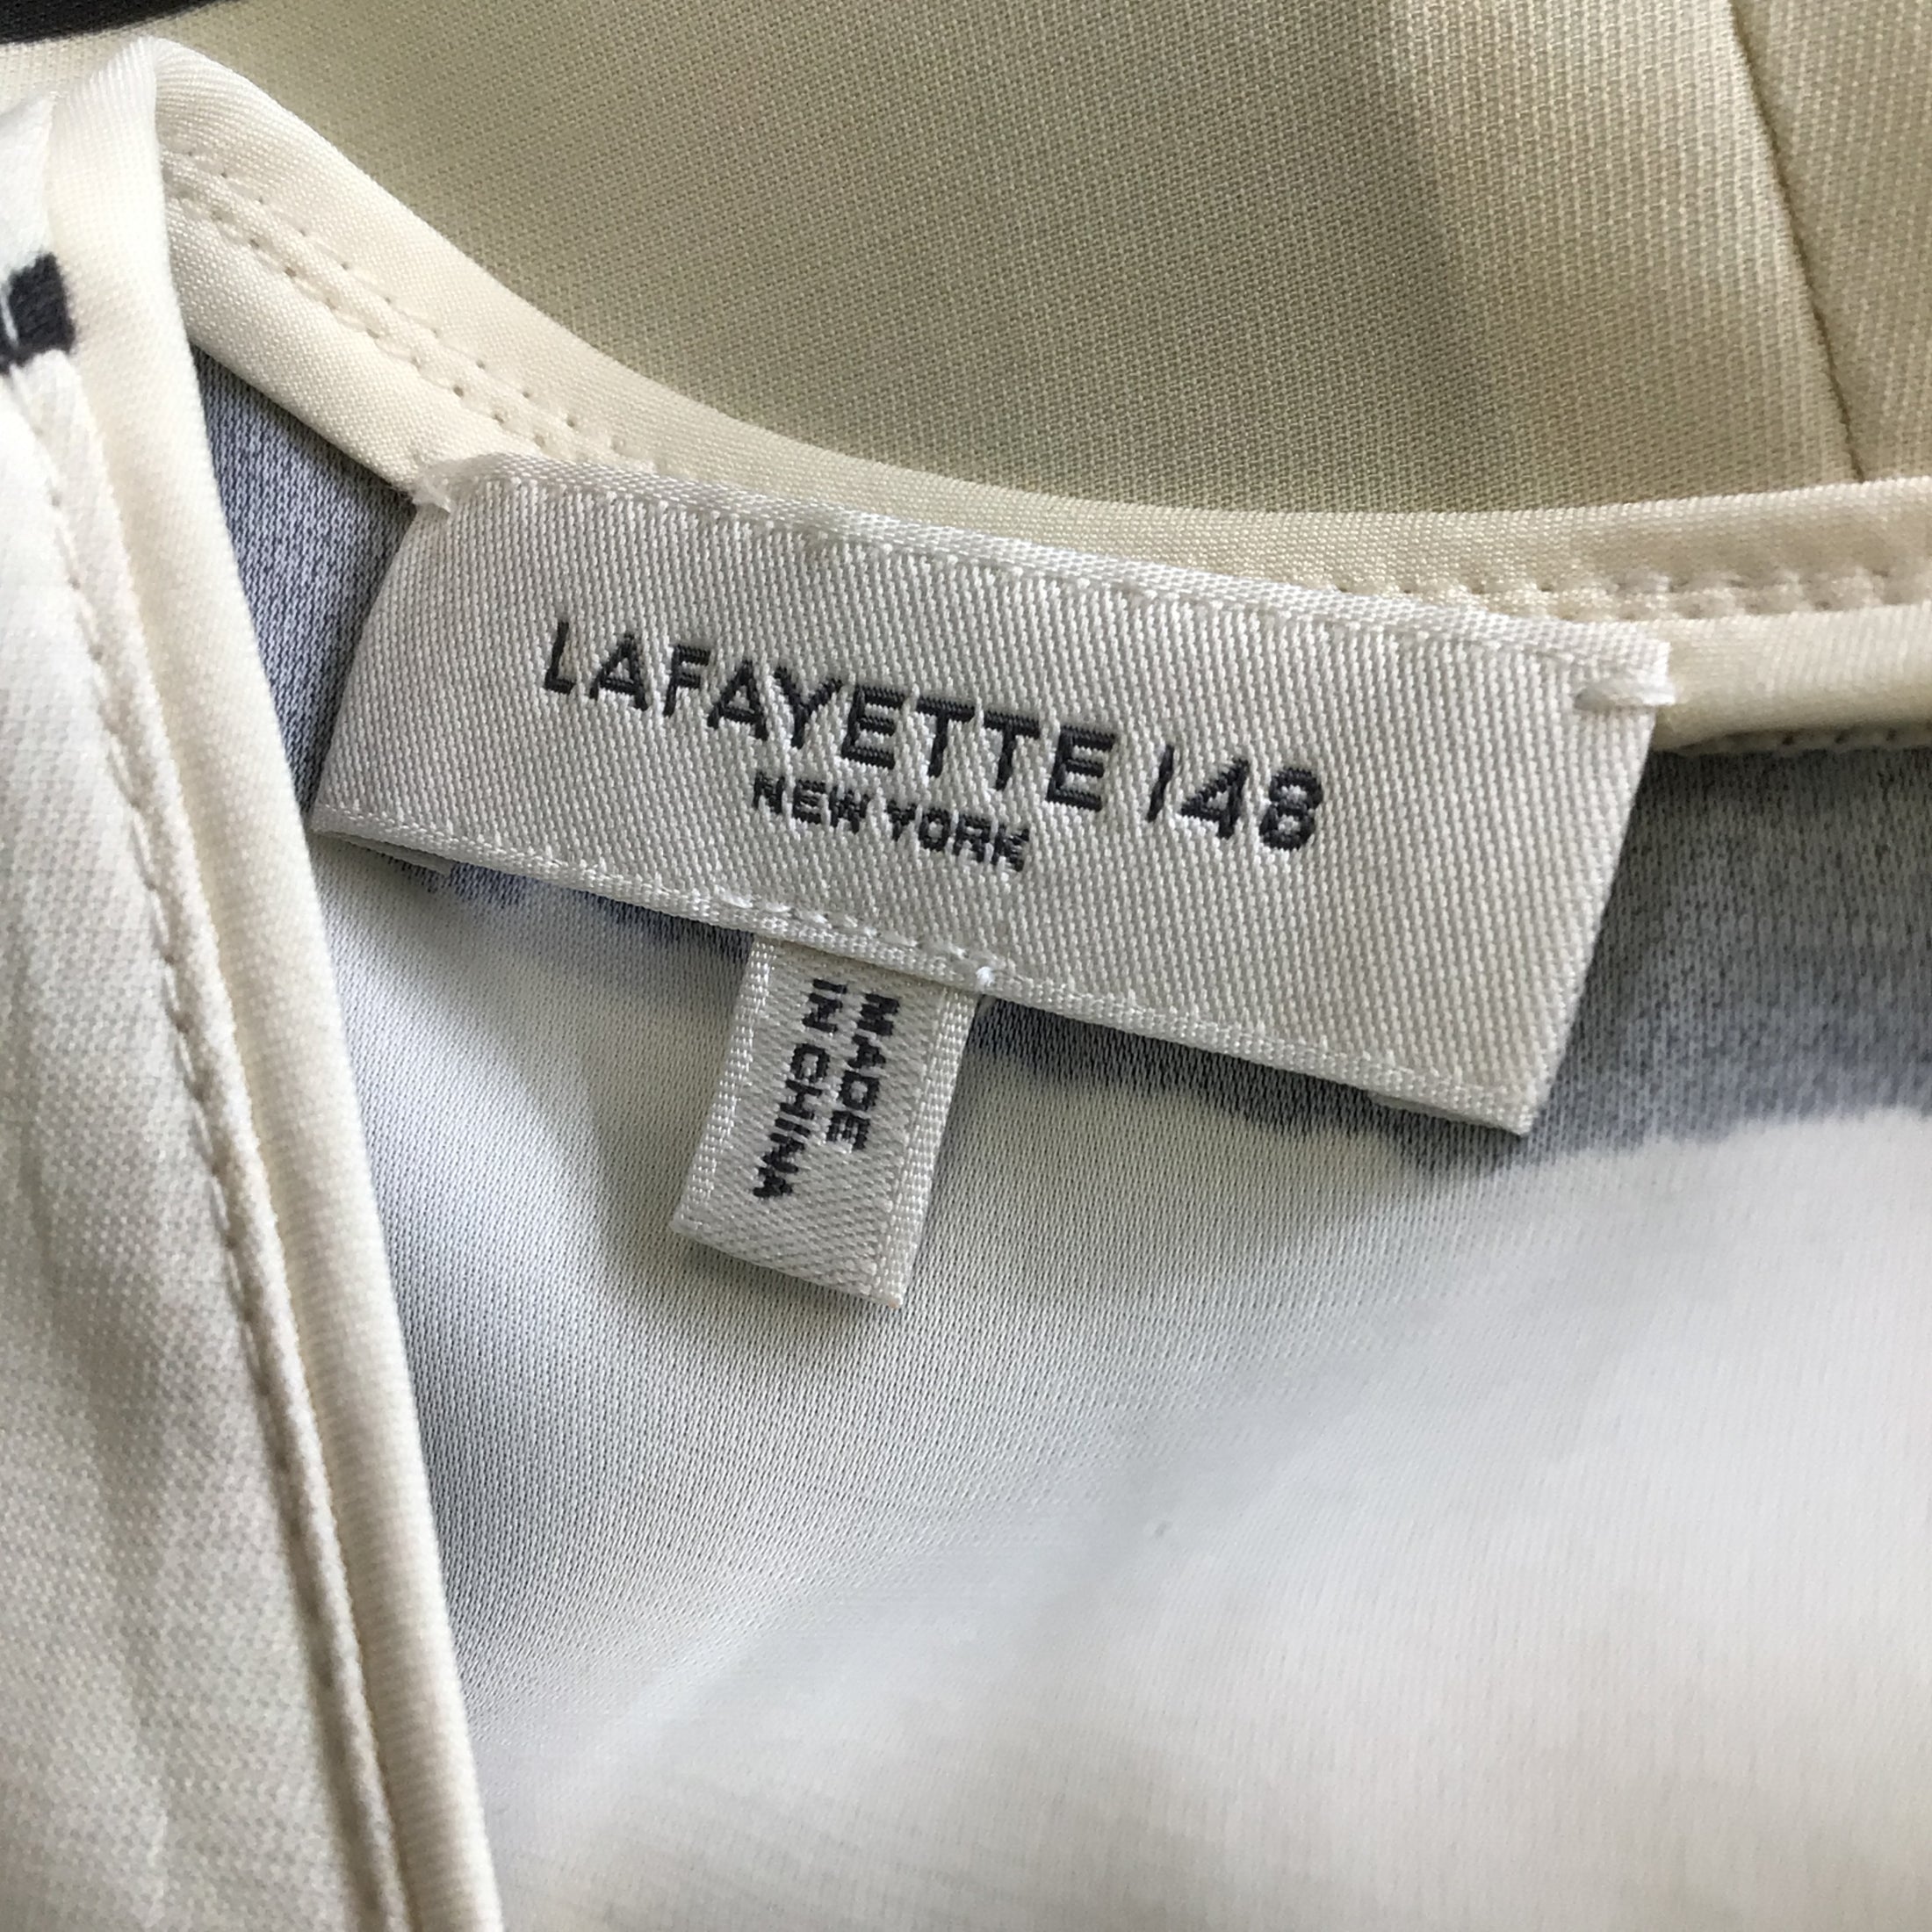 Lafayette 148 New York Ivory / Black Striped Sleeveless Crepe Midi Dress